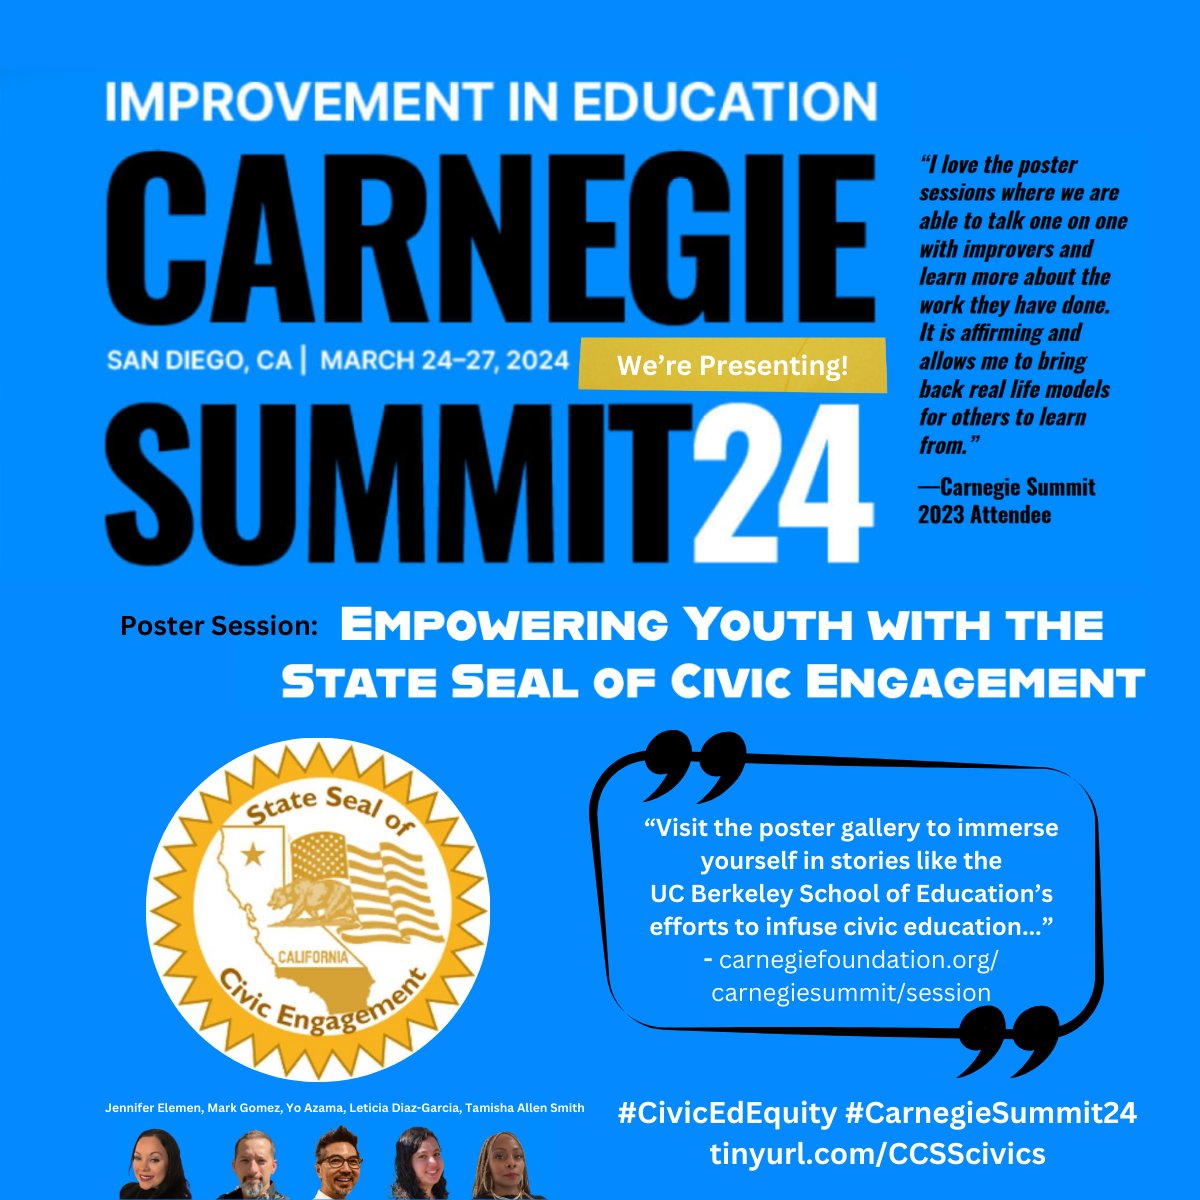 Excited to present at #CarnegieSummit24! 
🔁carnegiefoundation.org/carnegie-summi…
📈21cslacenter.berkeley.edu #LeadingForEquity #ContinuousImprovement #YouthVoice #StateSealofCivicEngagement 
🏅tinyurl.com/CCSScivics #CivicEdEquity